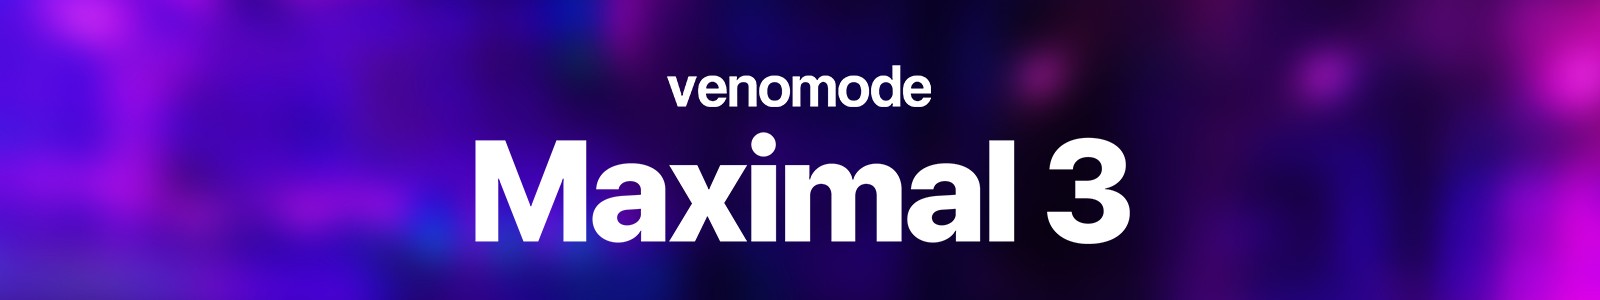 MAXIMAL 3 by Venomode